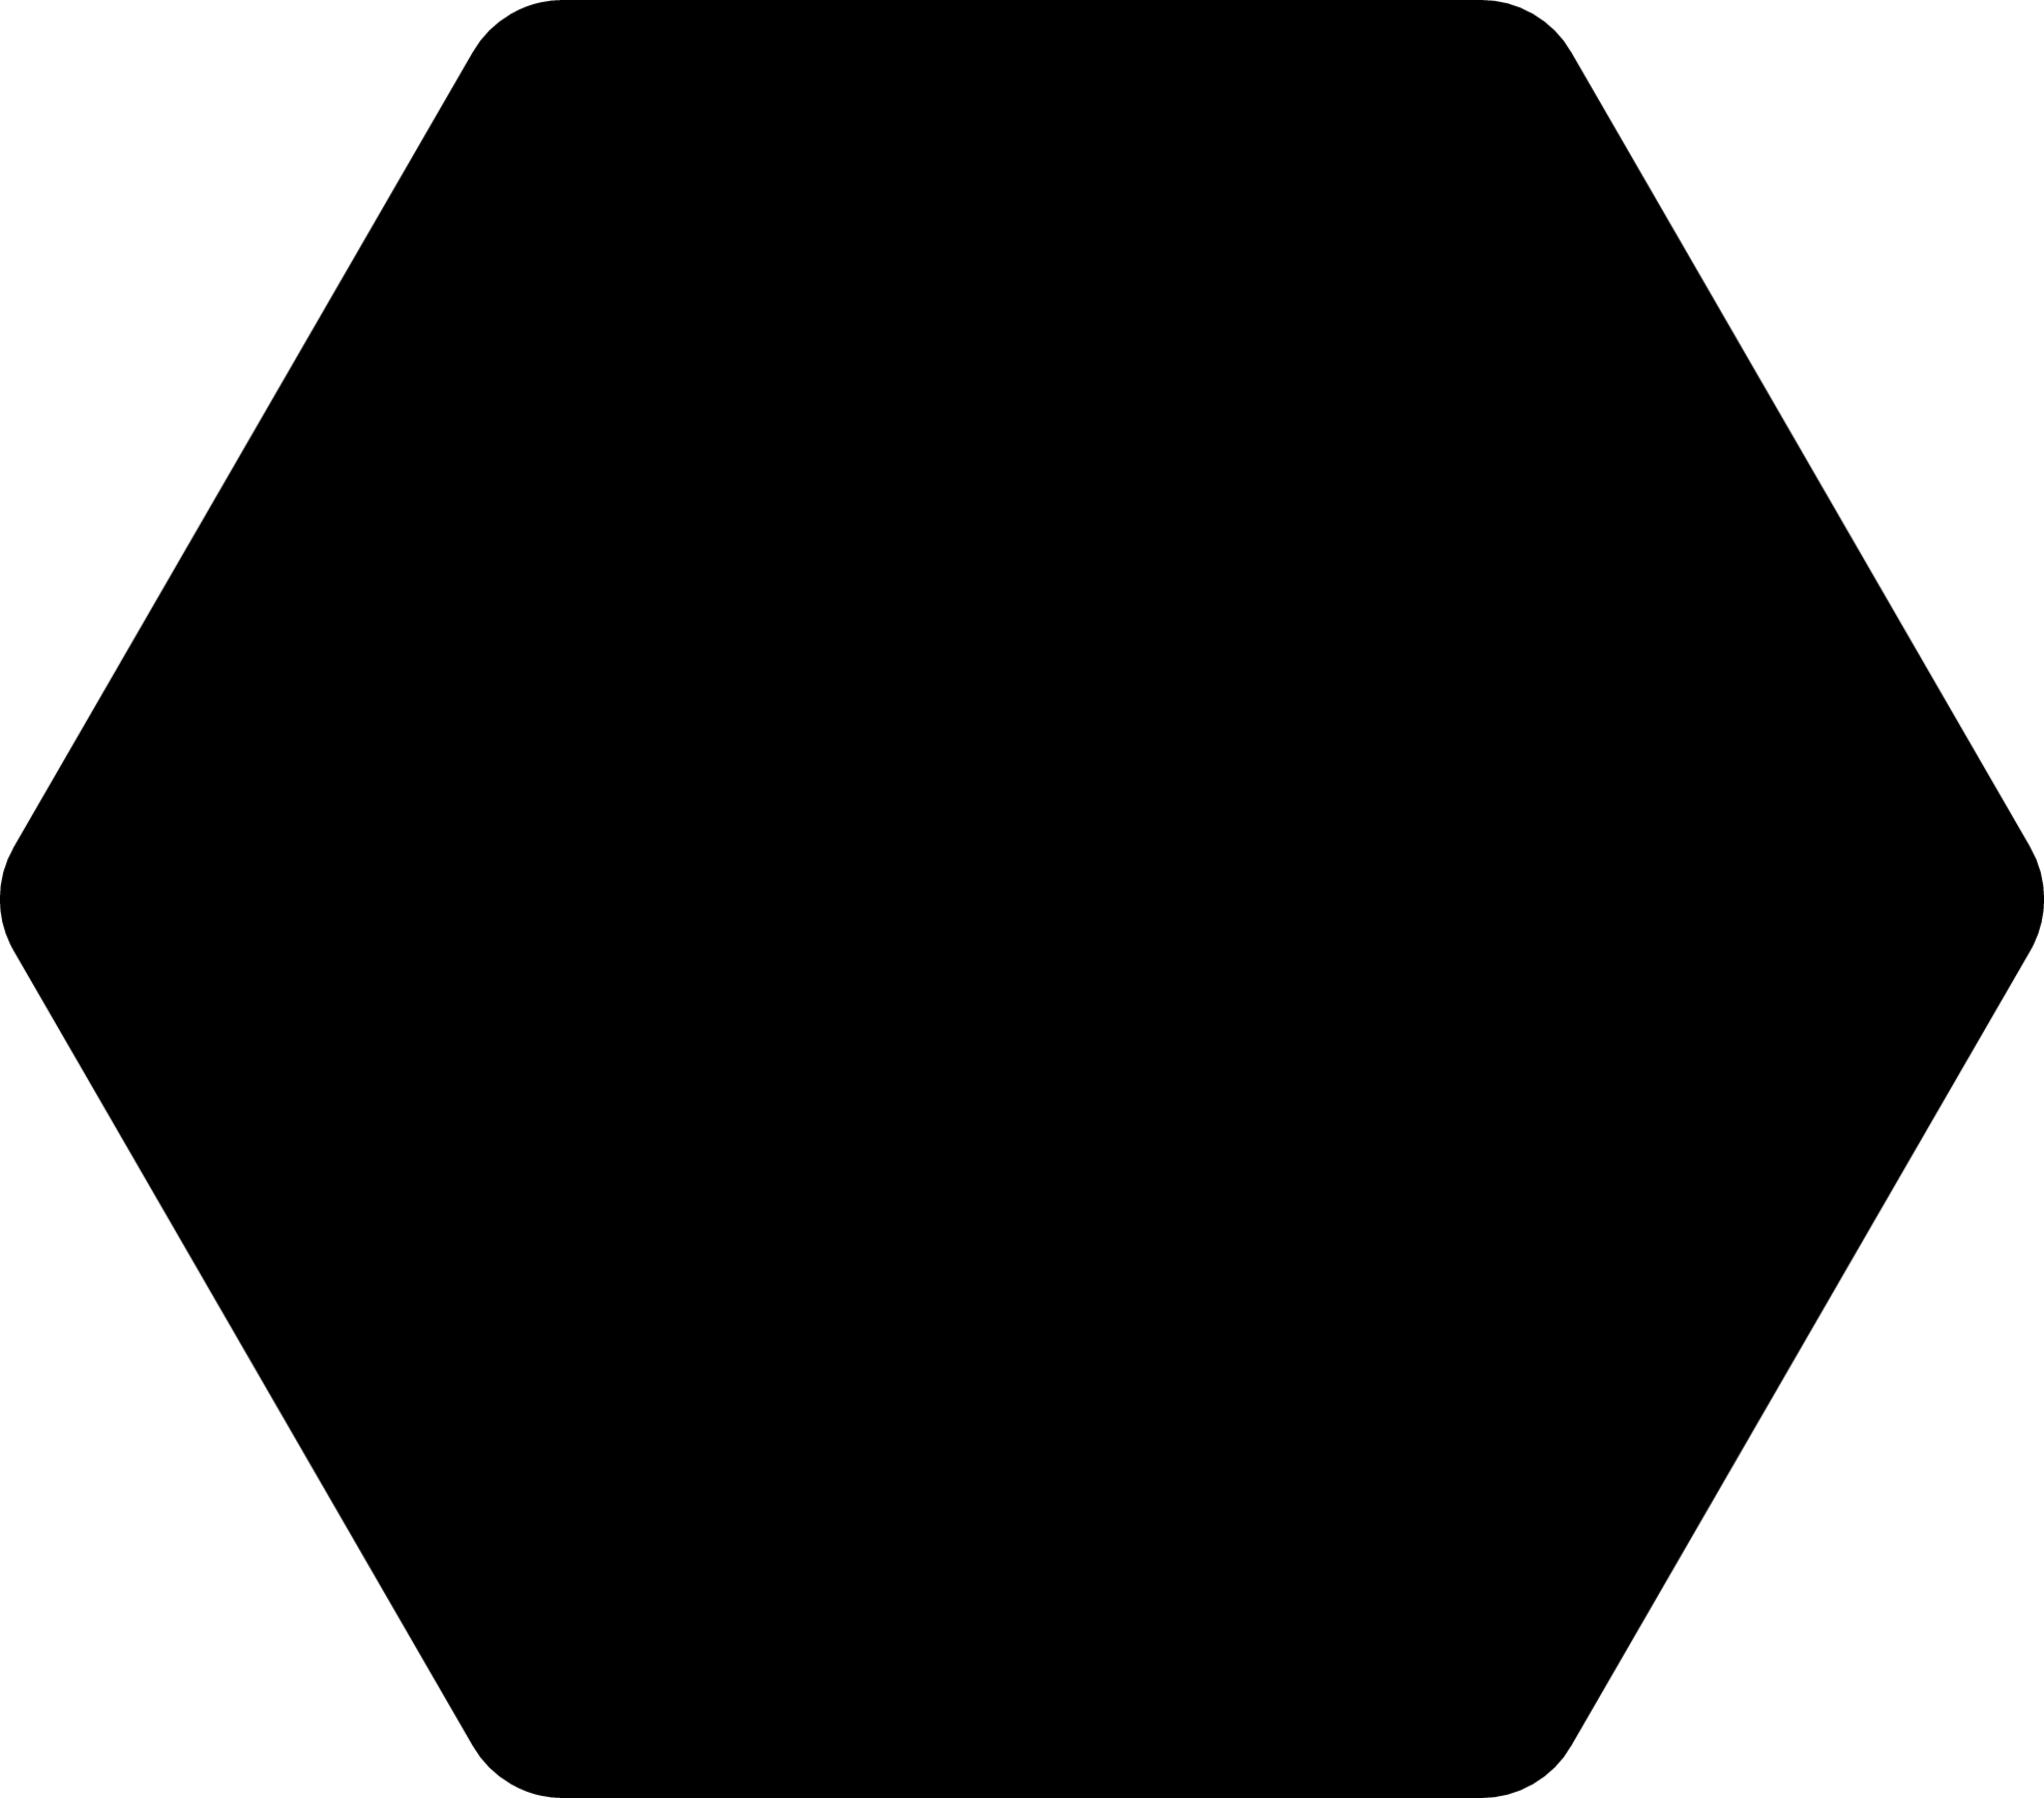 horizontal black hexagon  emoji